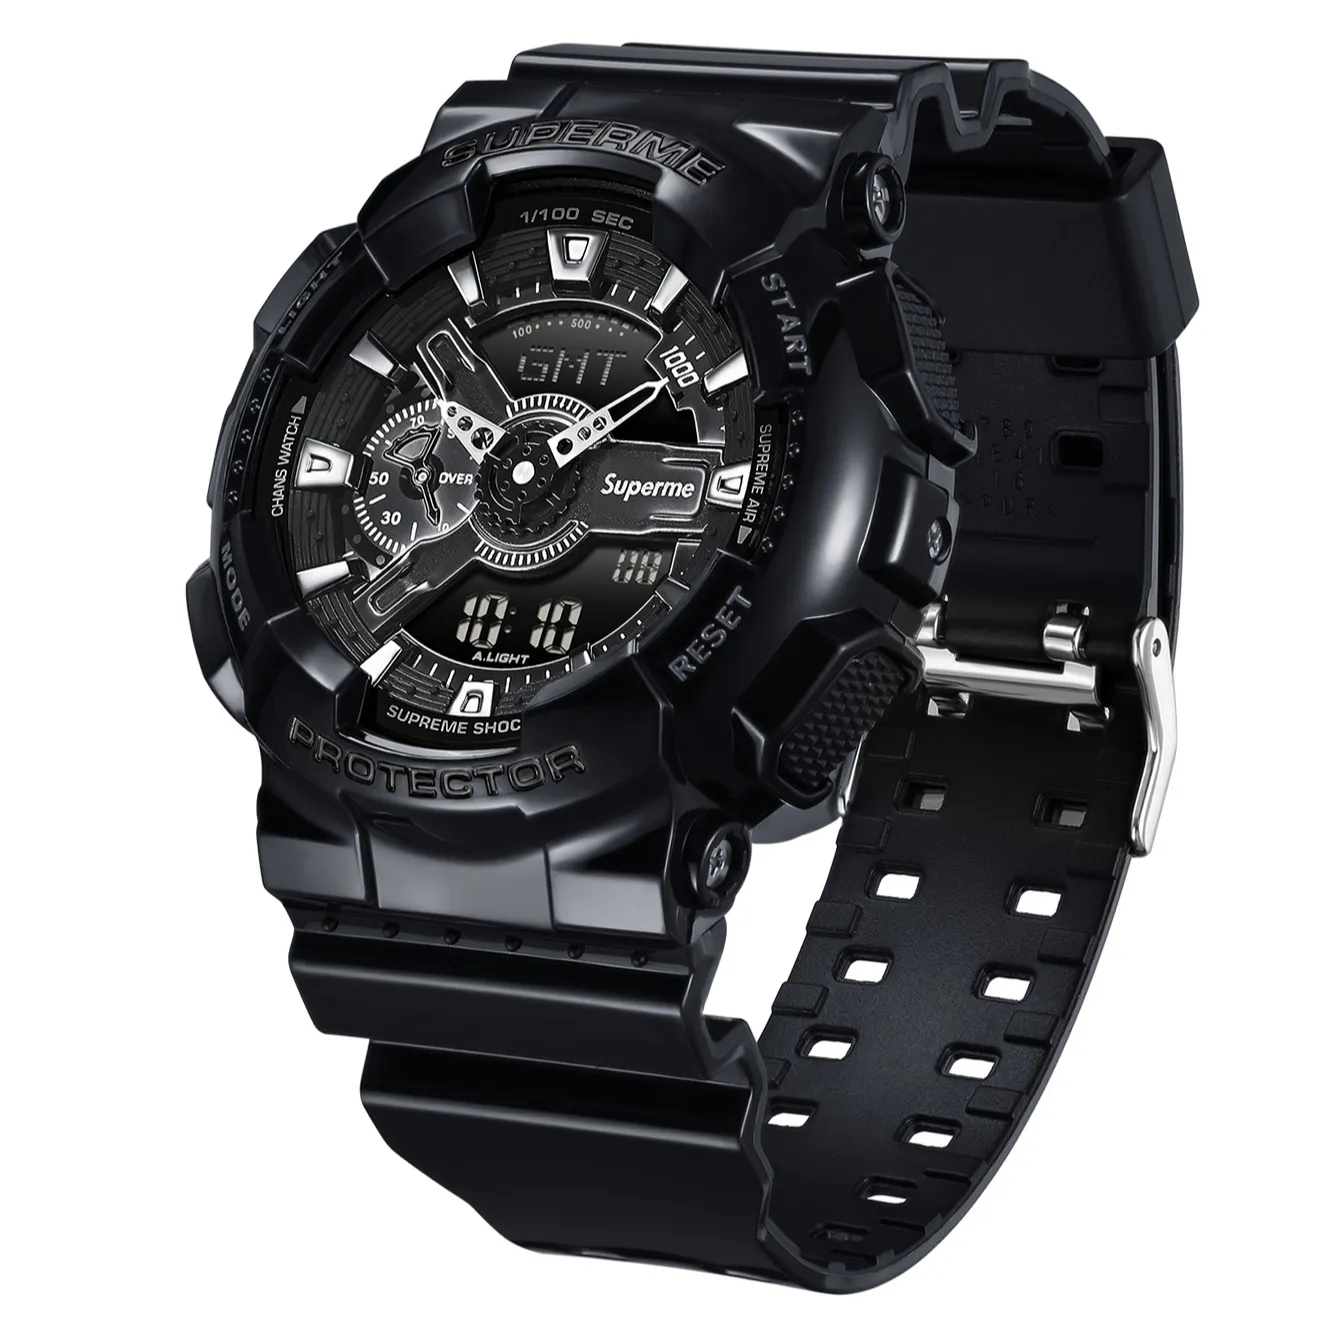 Custom Dual Display Wrist Watch Analogue Leather Waterproof Sport Digital Watches Men